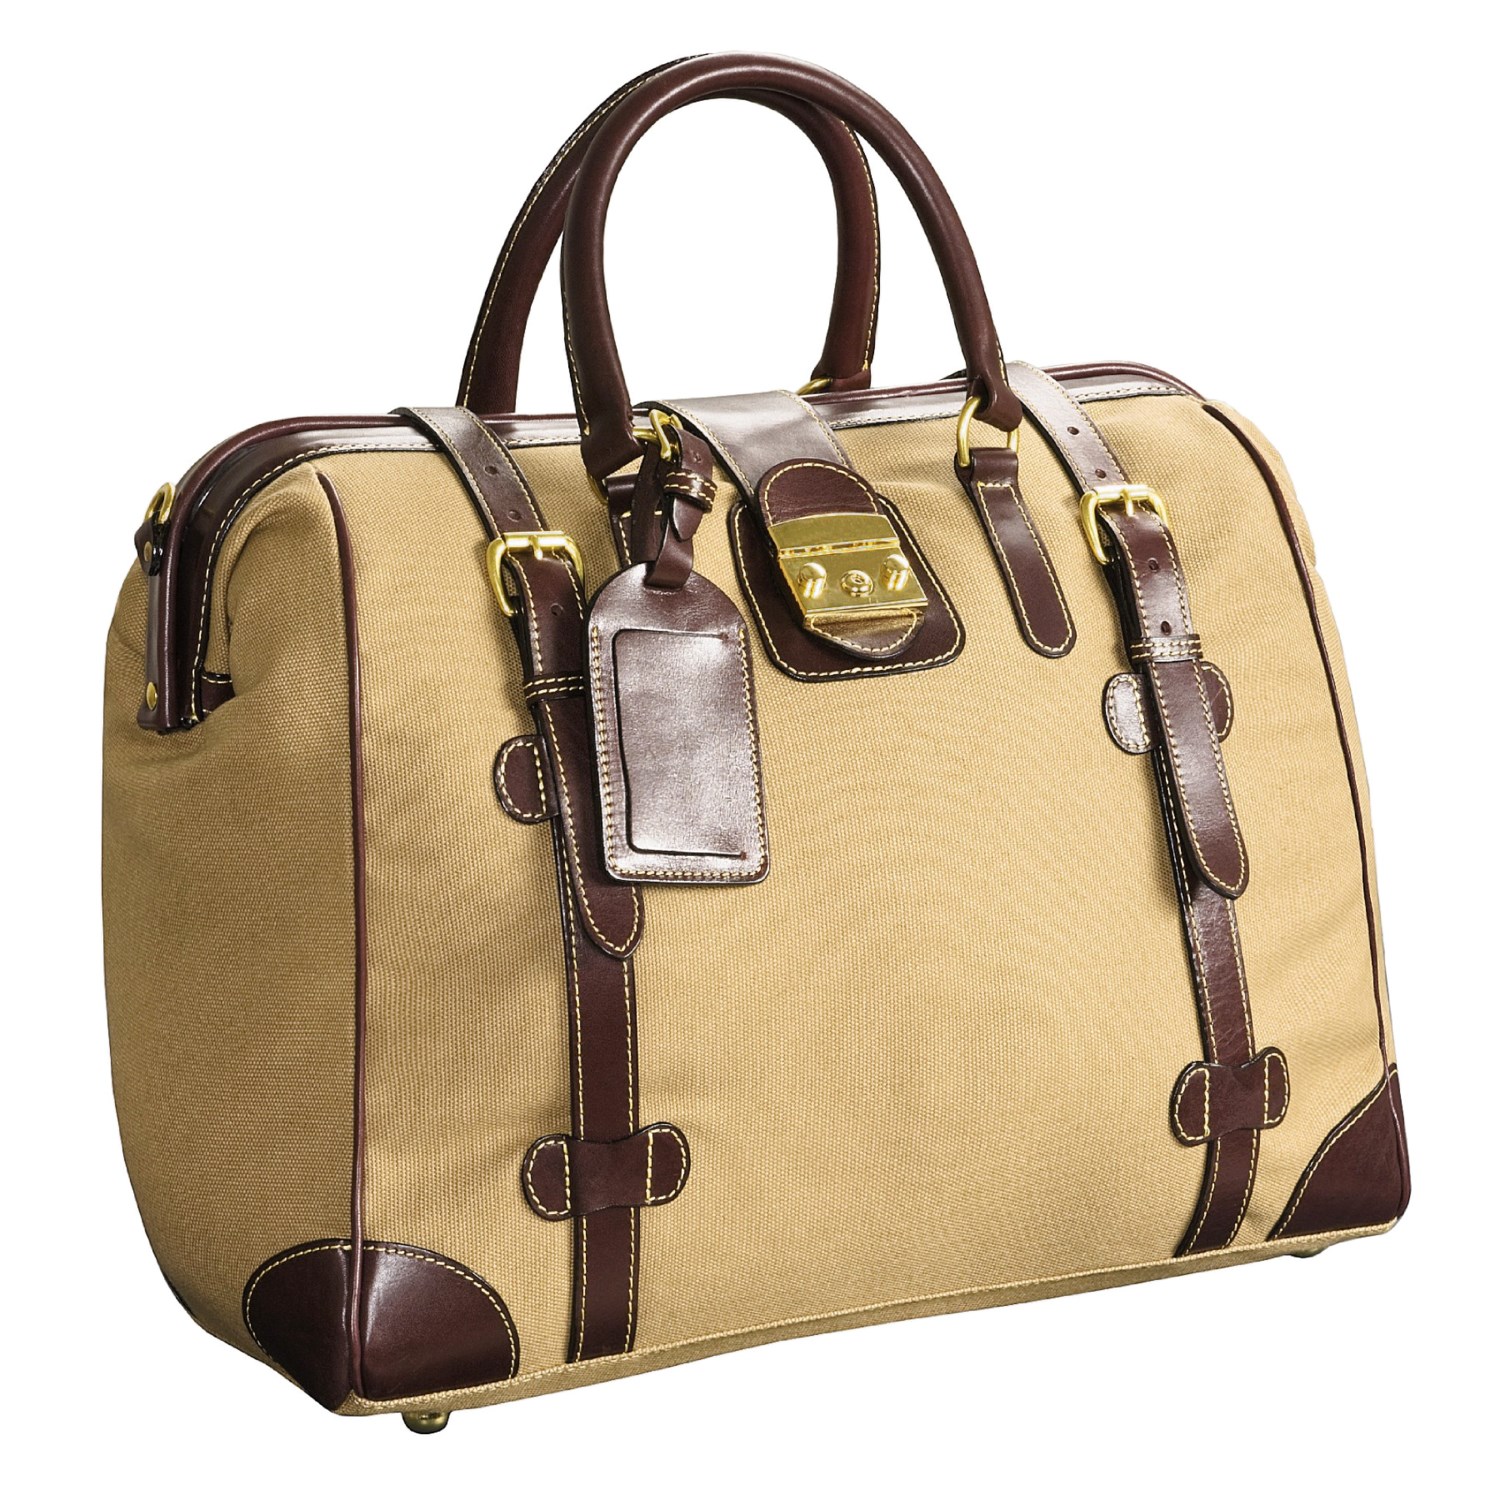 Mulholland Brothers Luggage Safari Bag - Canvas 80915 - Save 42%